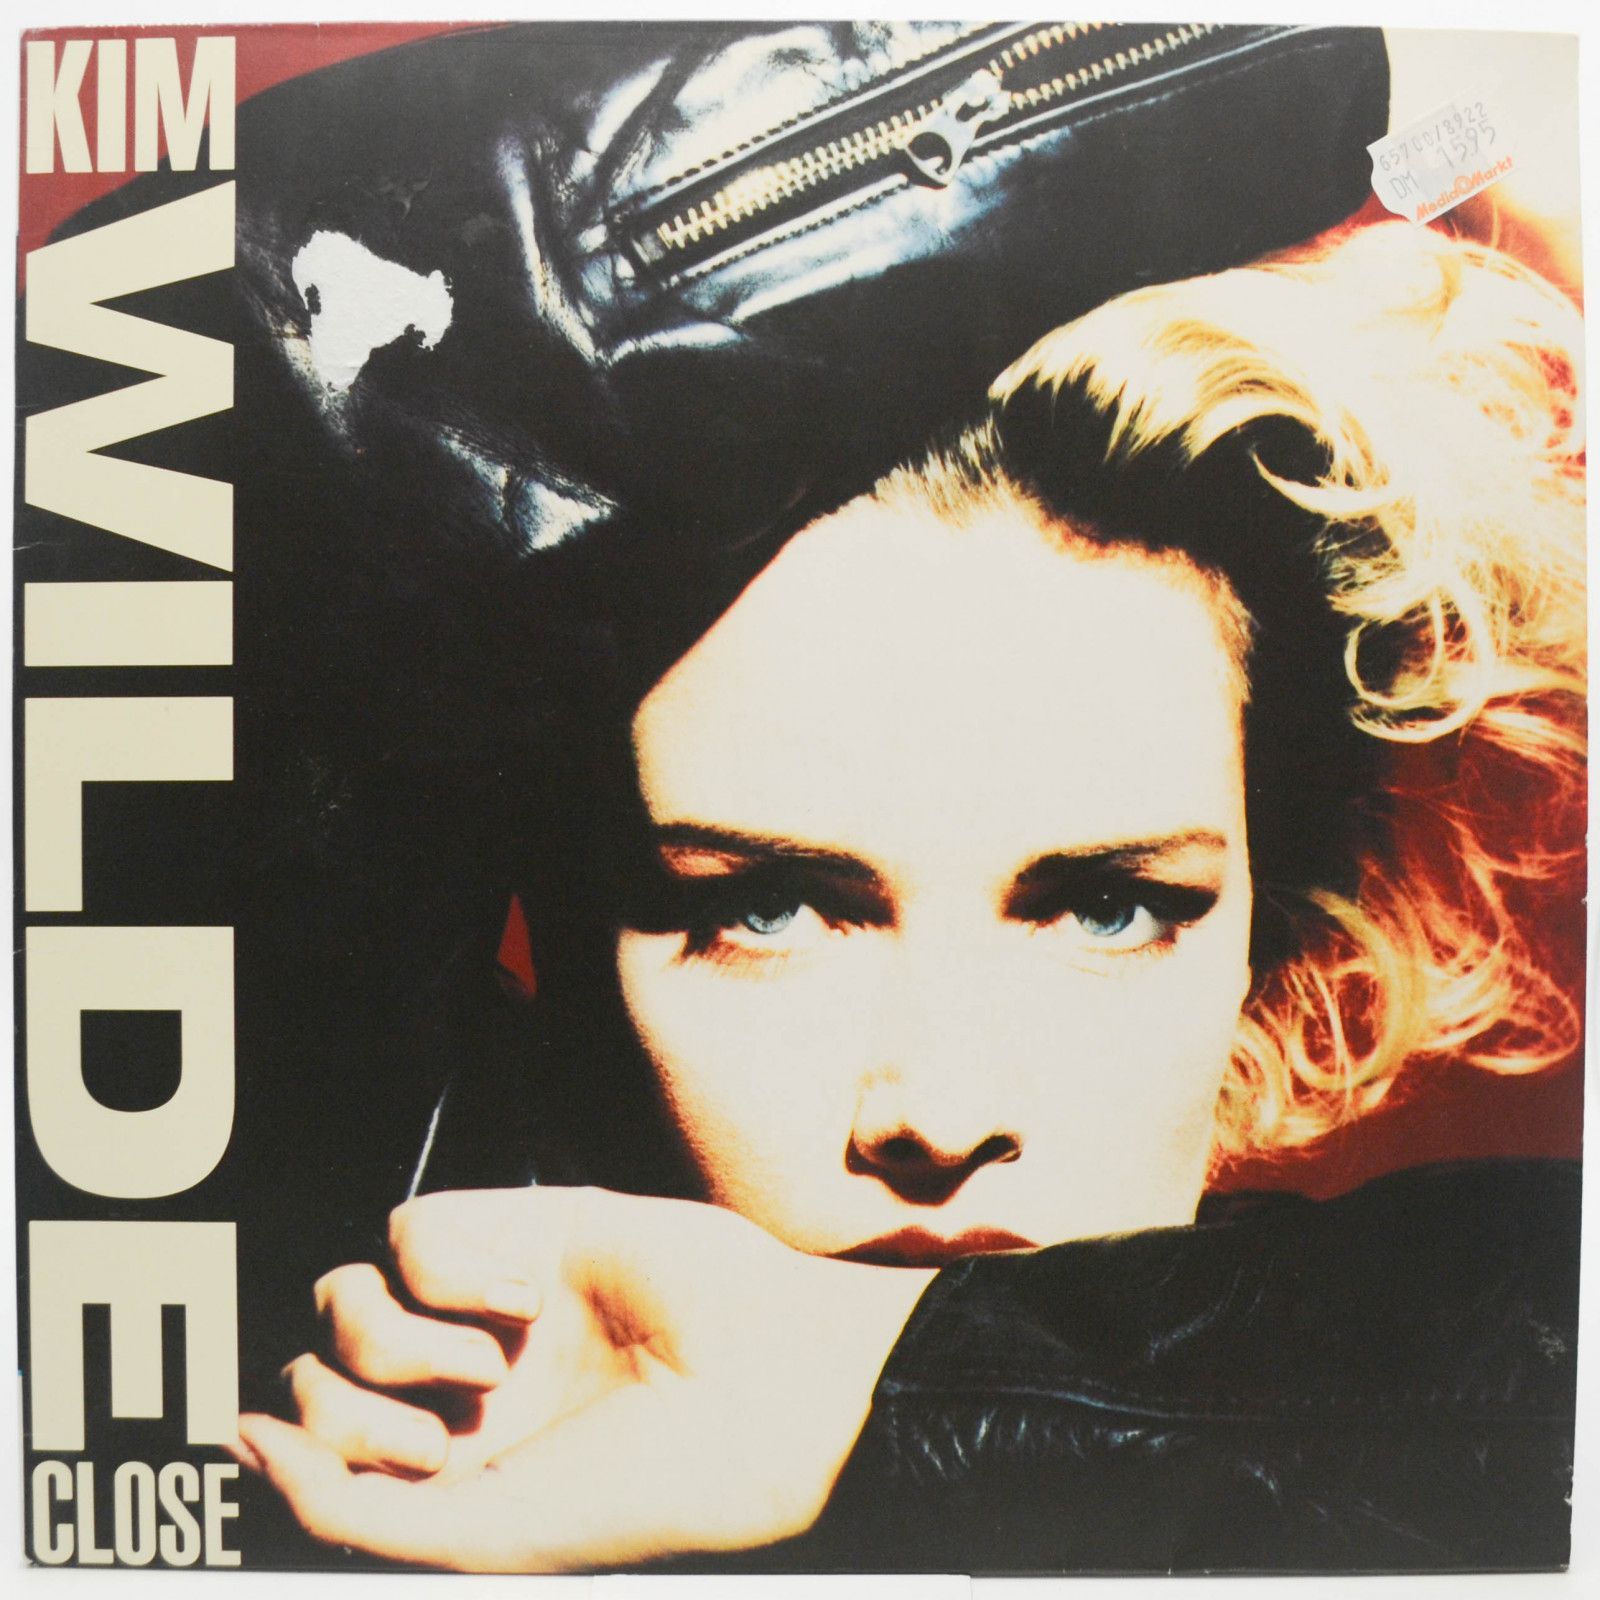 Kim Wilde — Close, 1988